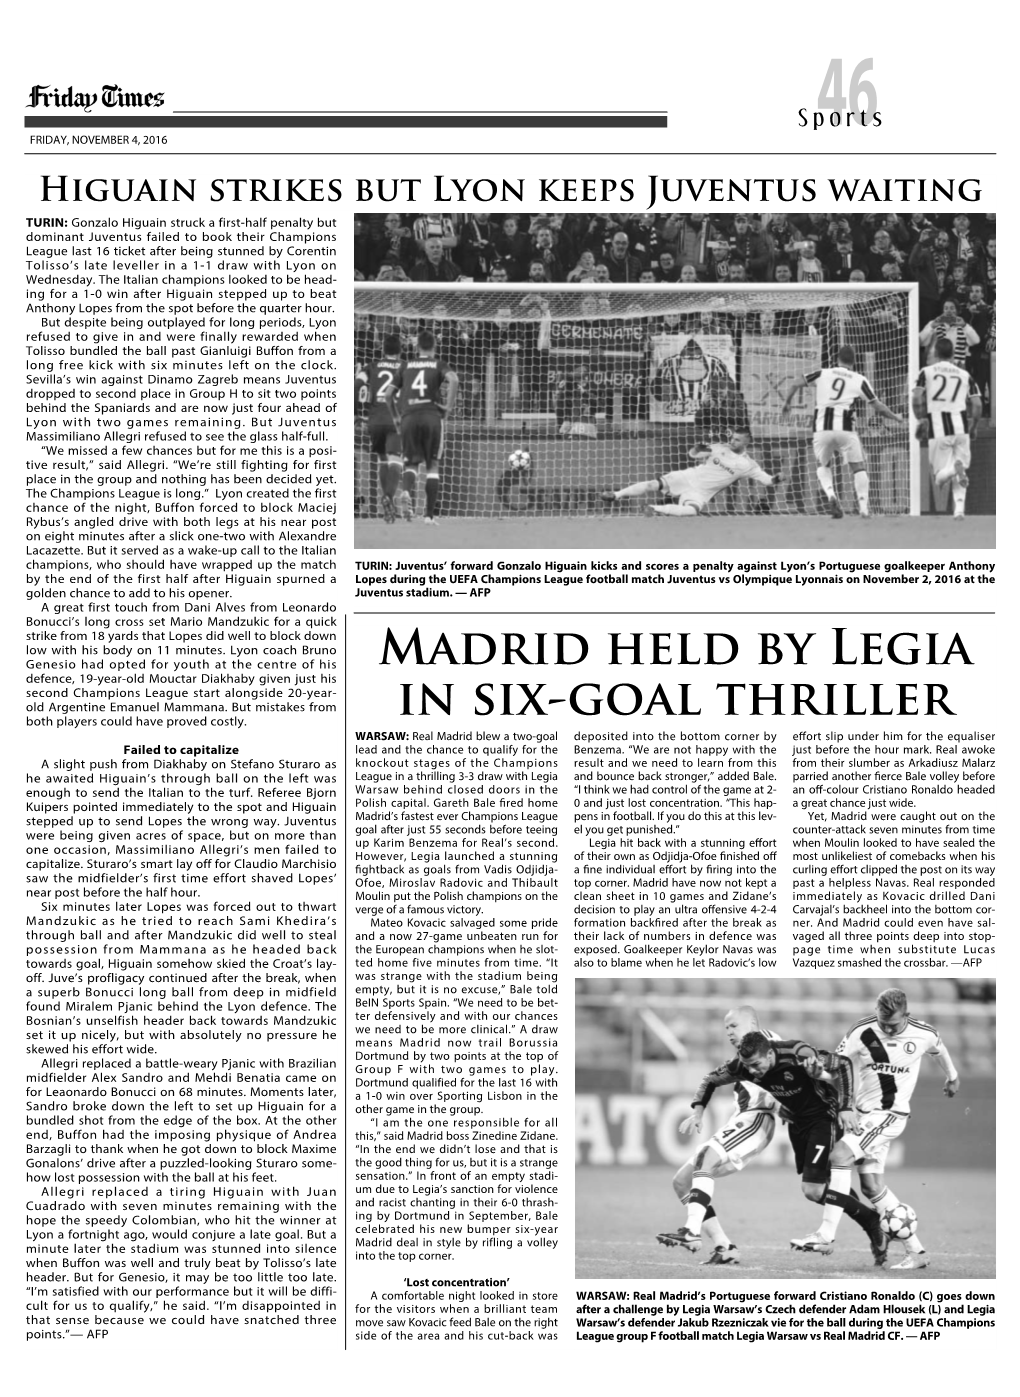 Madrid Held by Legia in Six-Goal Thriller